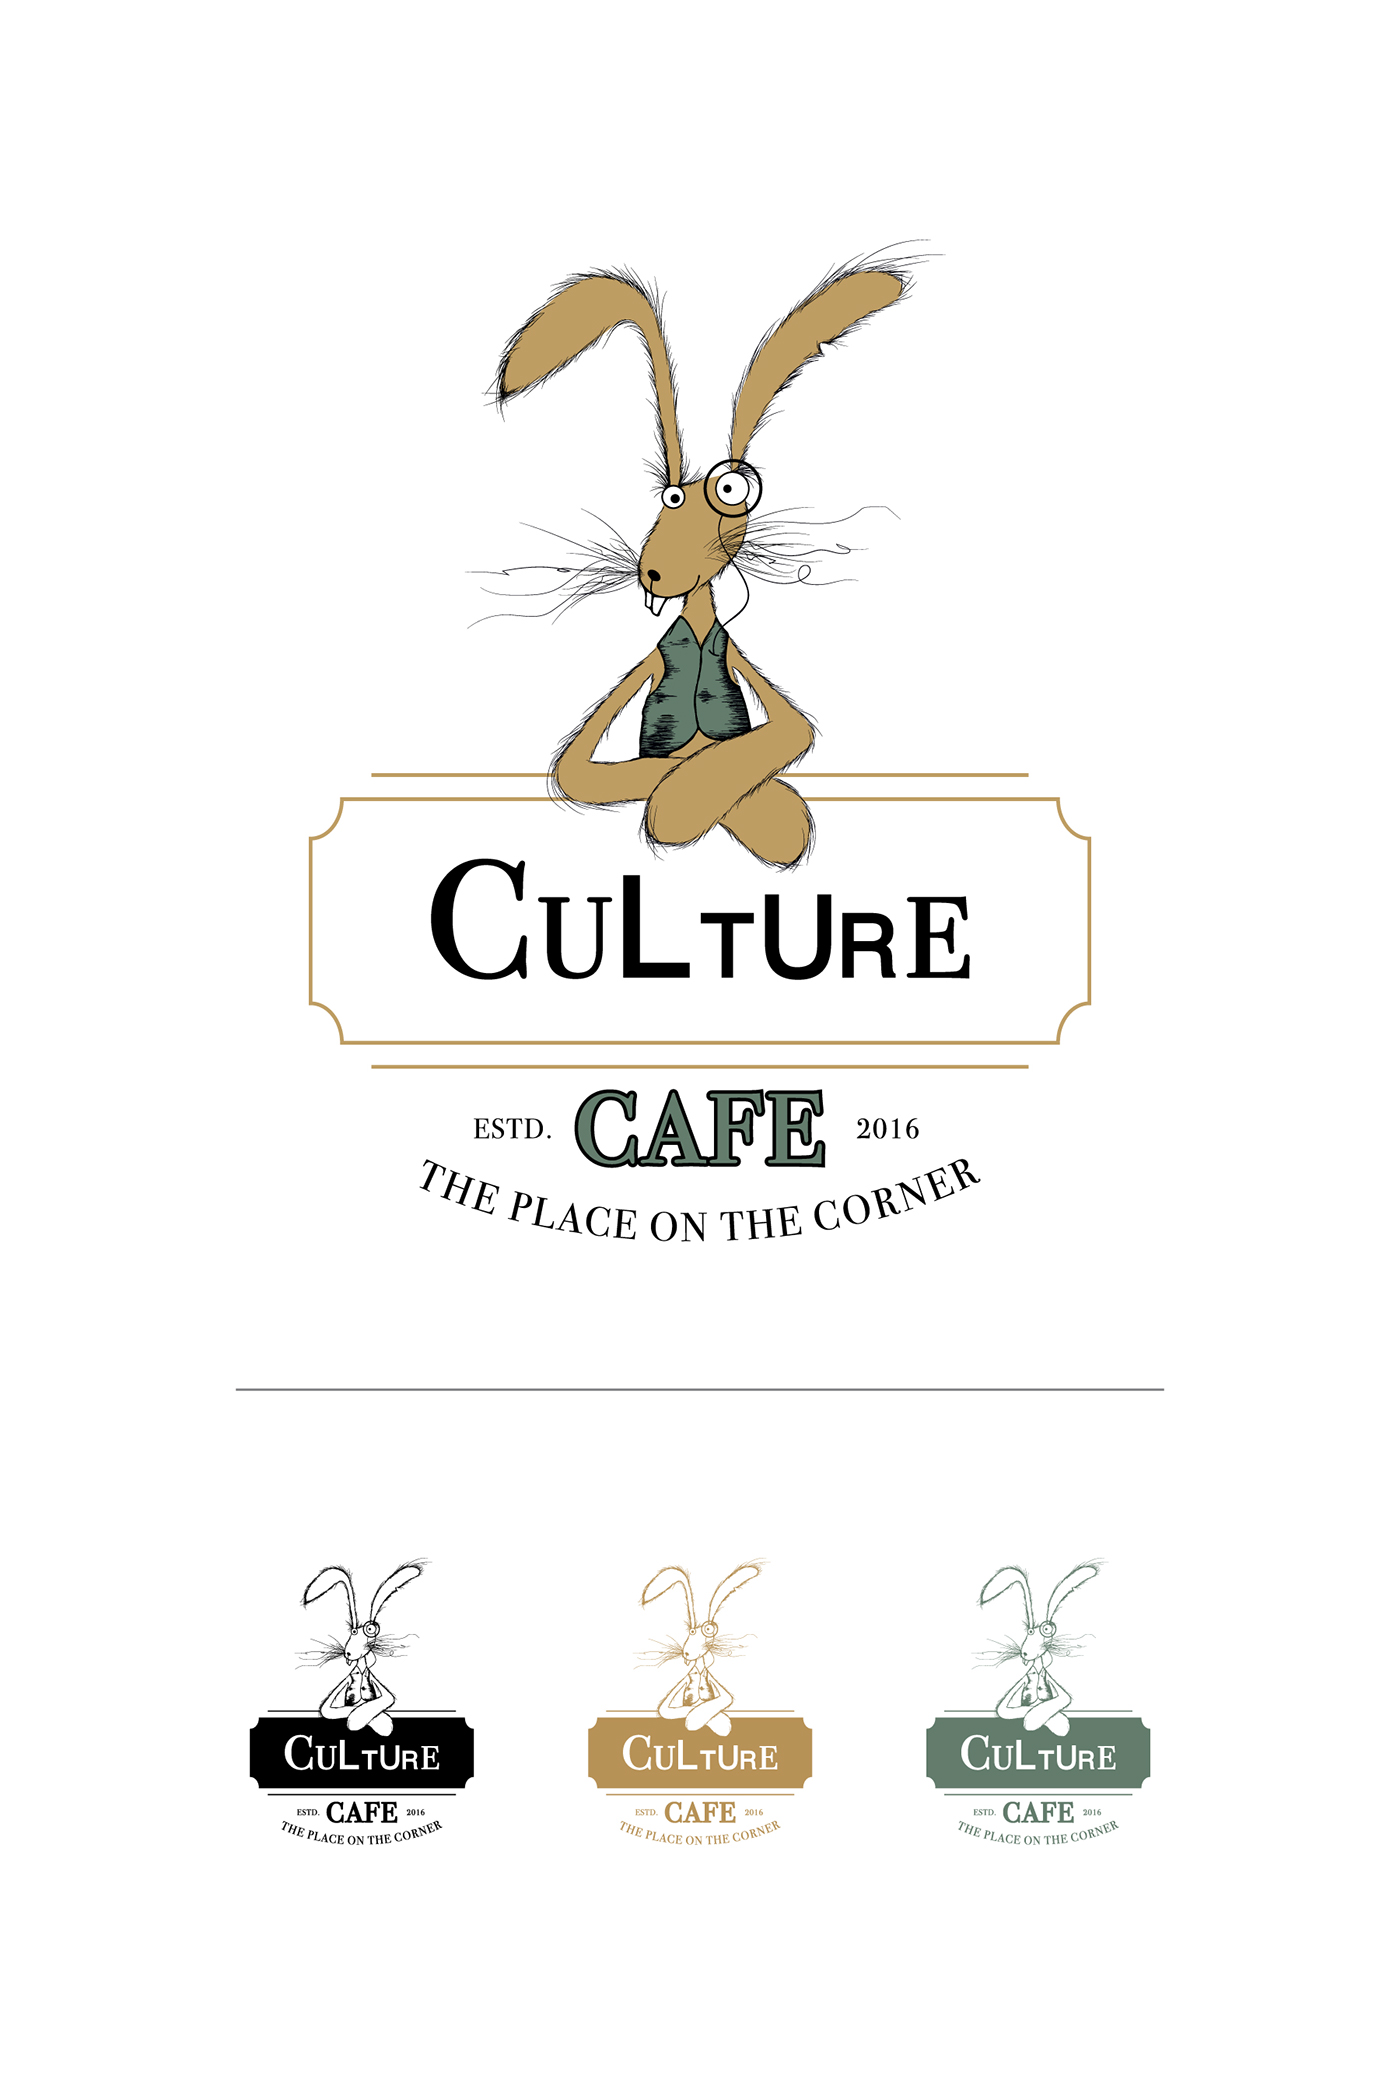 Logo Design Culture Cafe